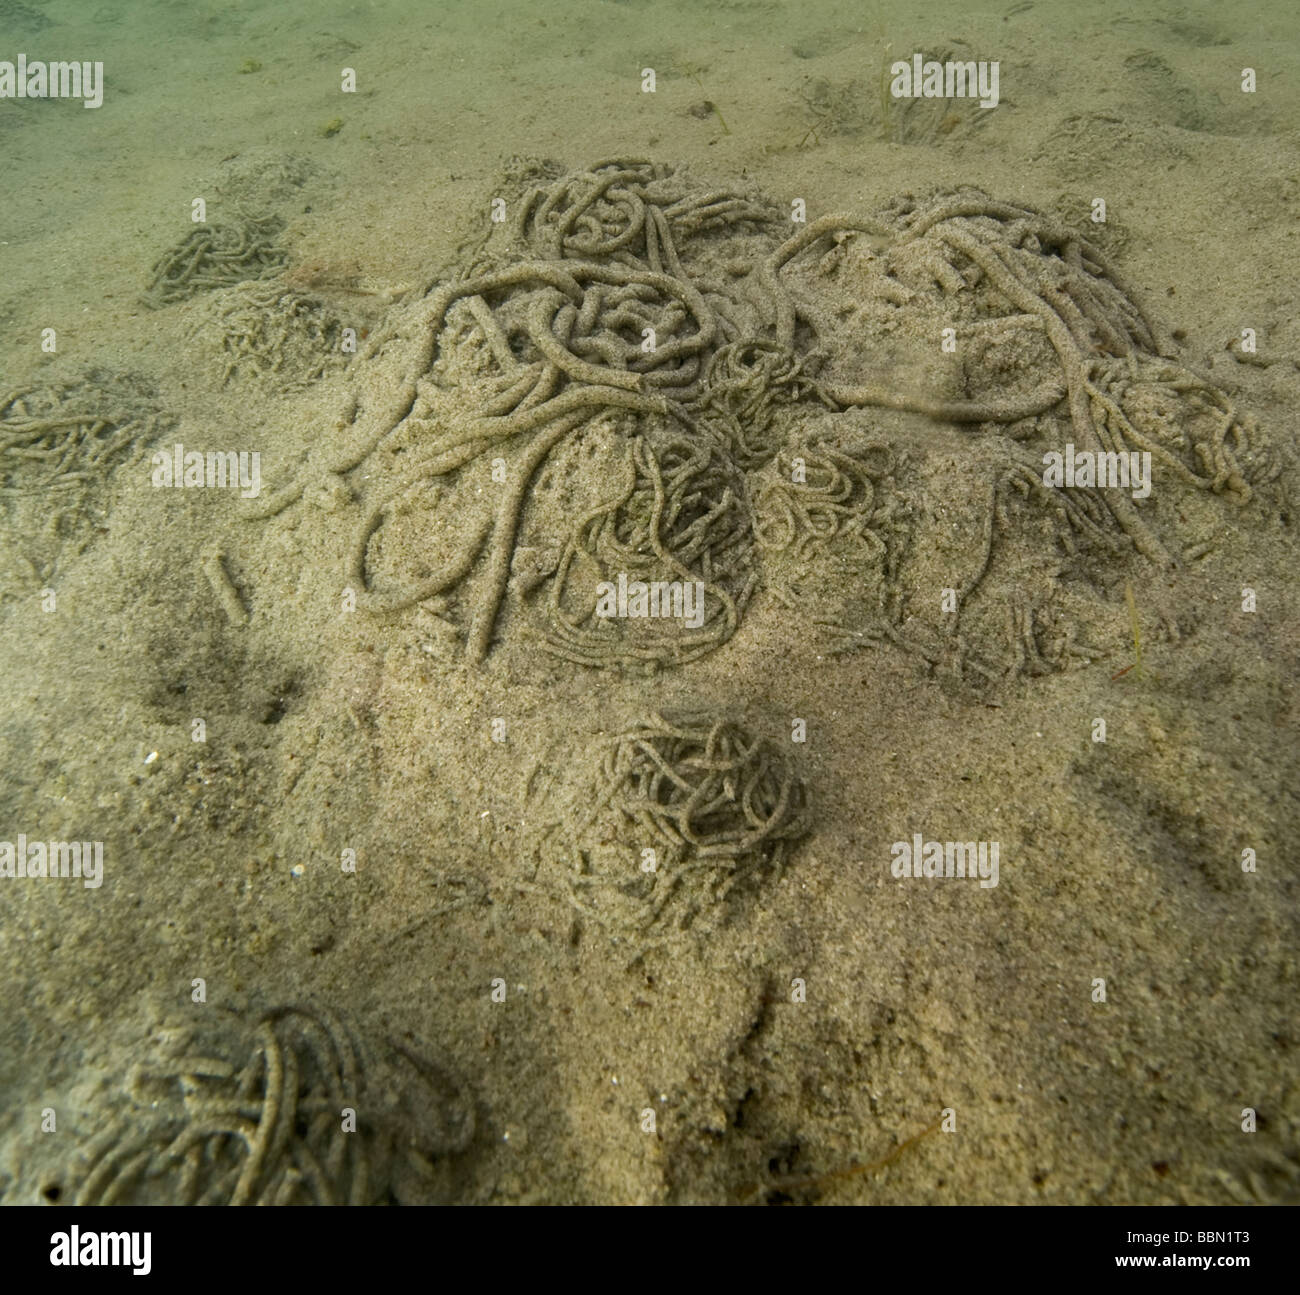 lungworm casts underwater, Sweden Stock Photo